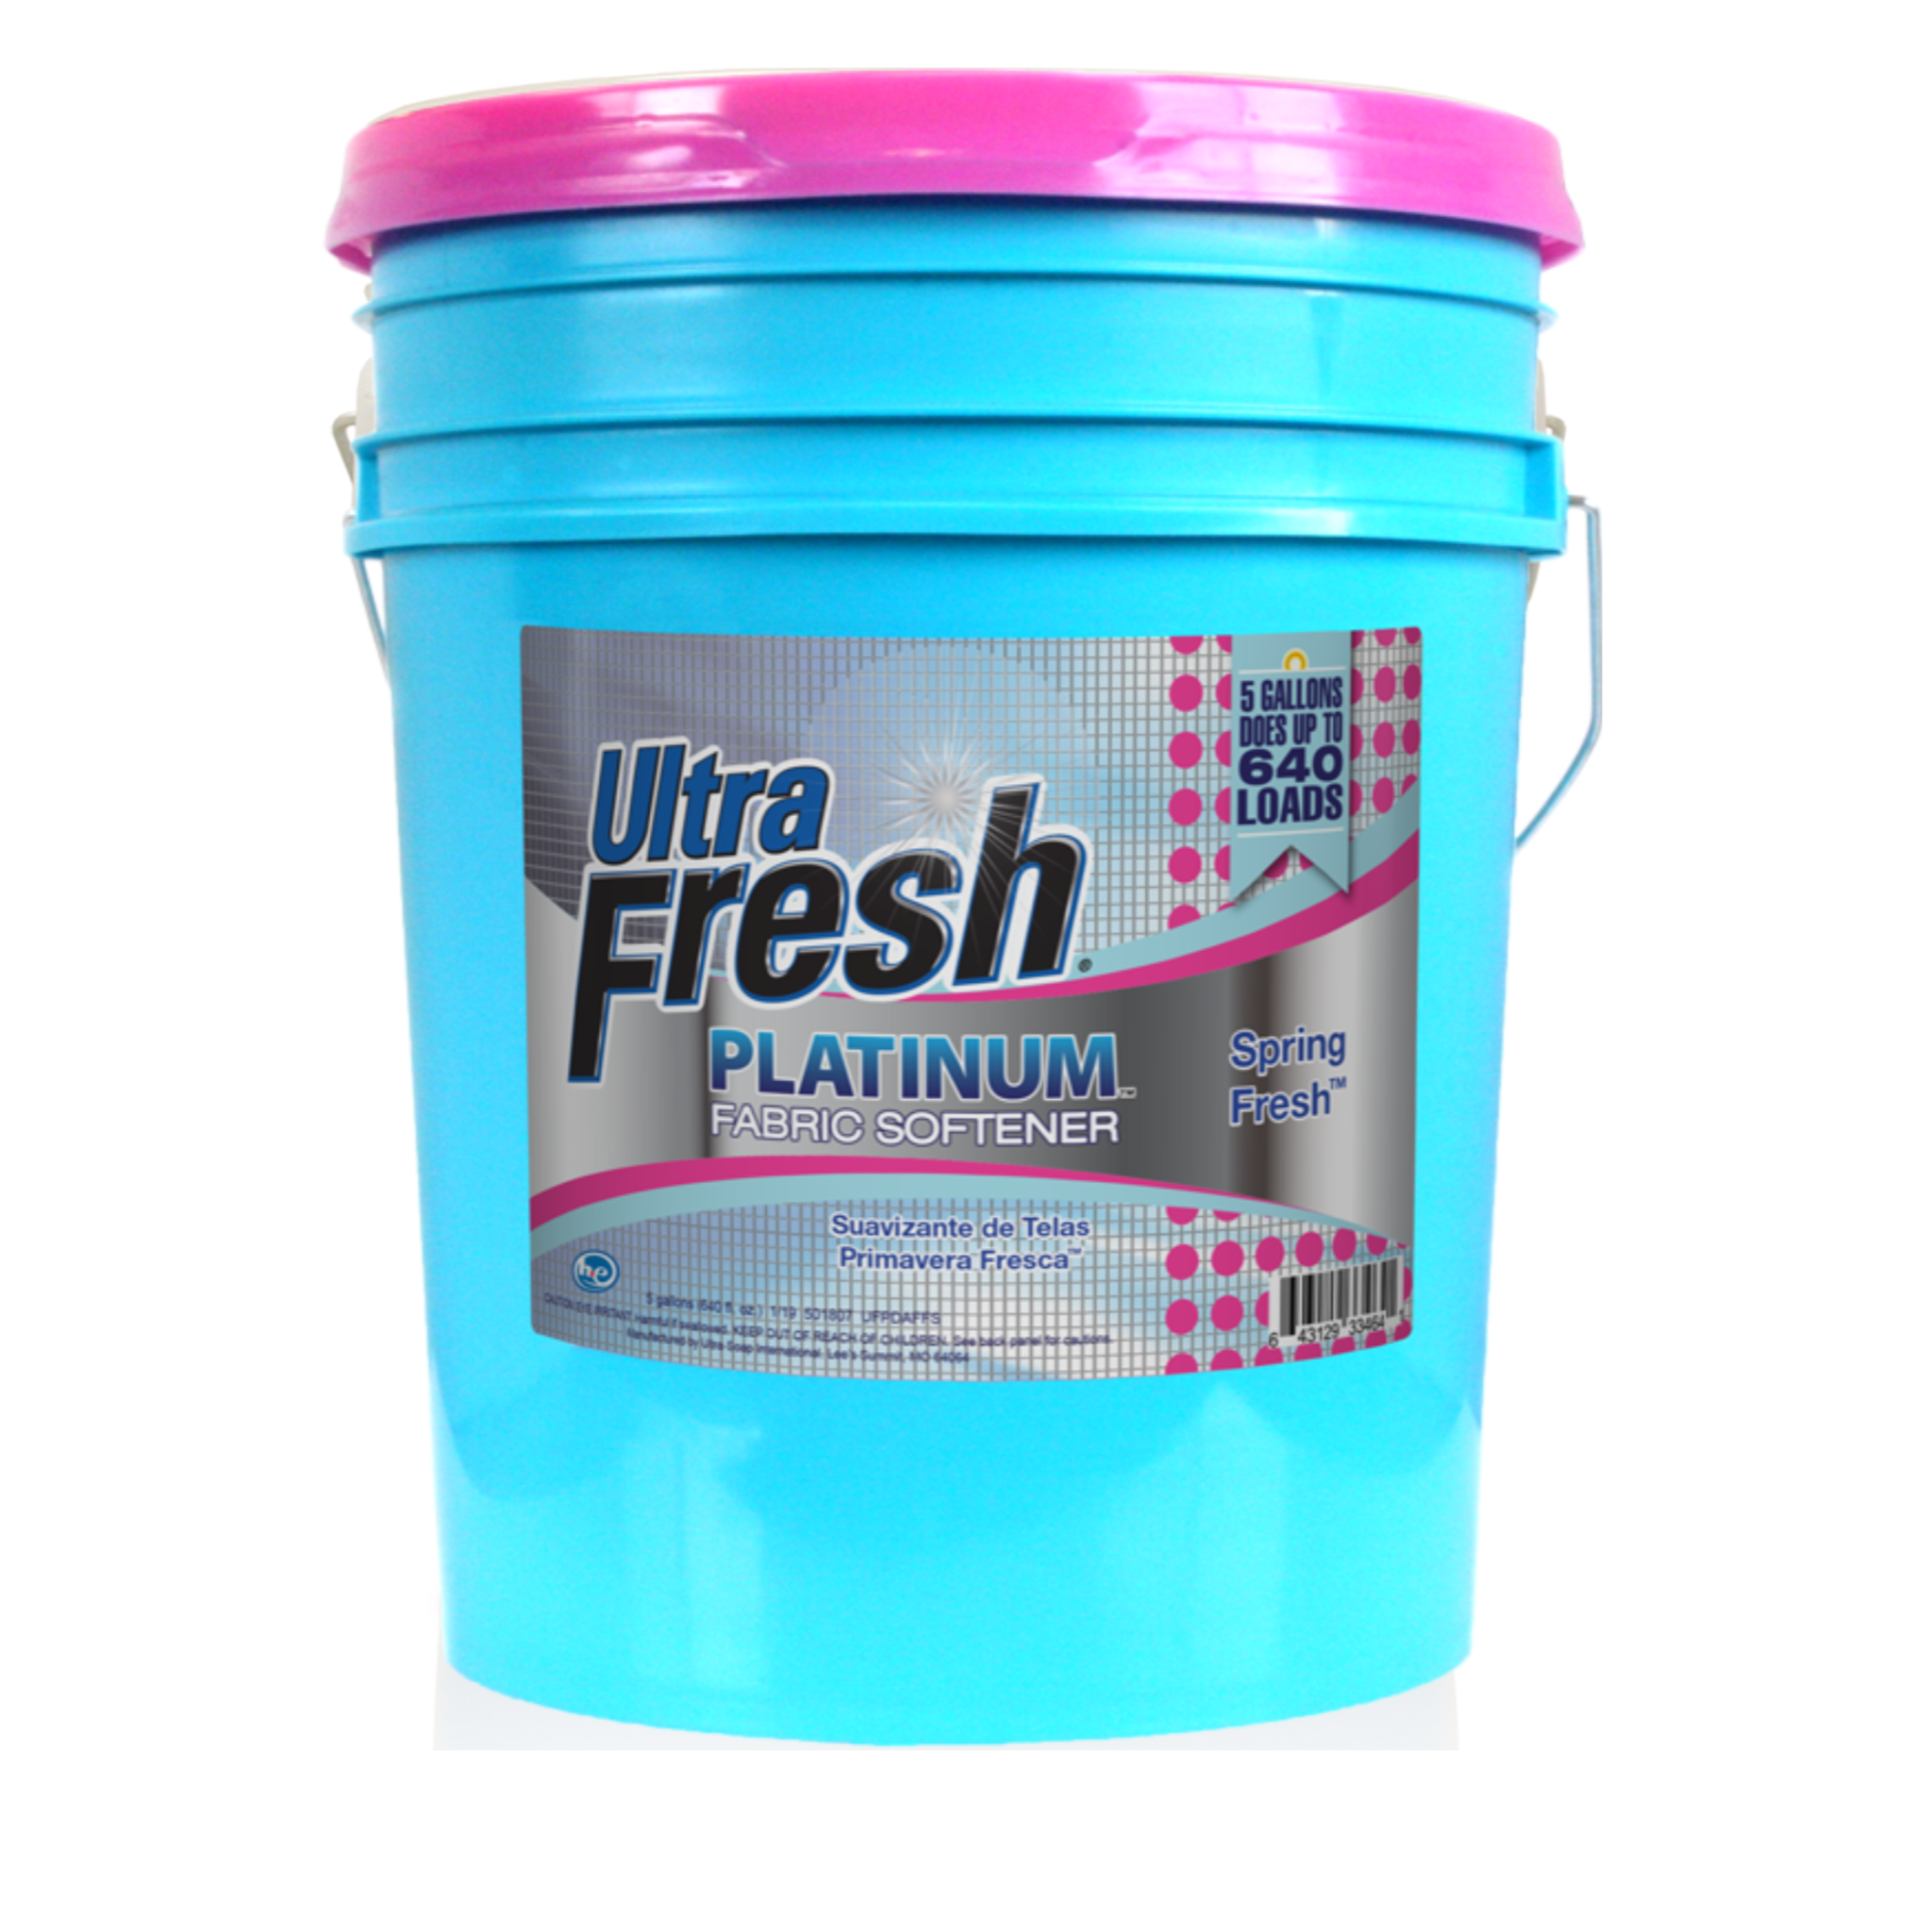 Ultra Fresh Platinum Lavender Fabric Softener - 5 Gallon